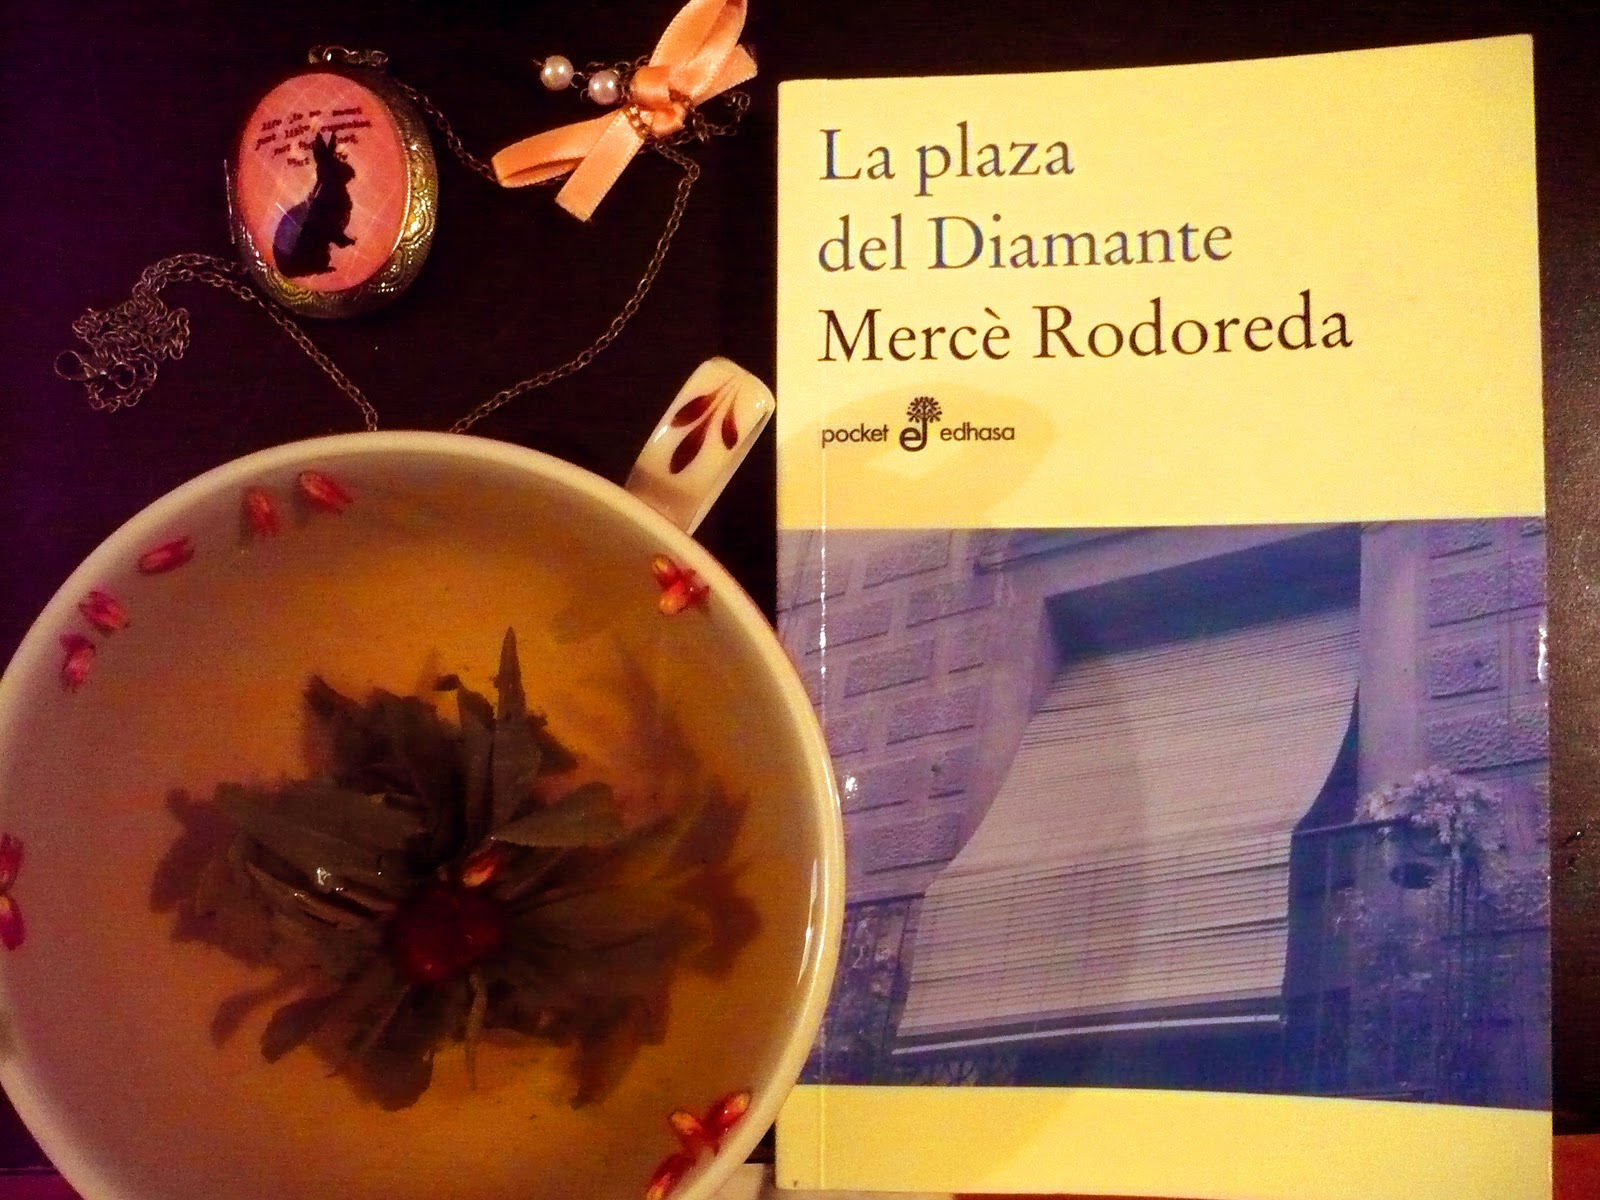 La plaça del diamant - Mercè Rodoreda, RODOREDA, MERÇE -5% en libros